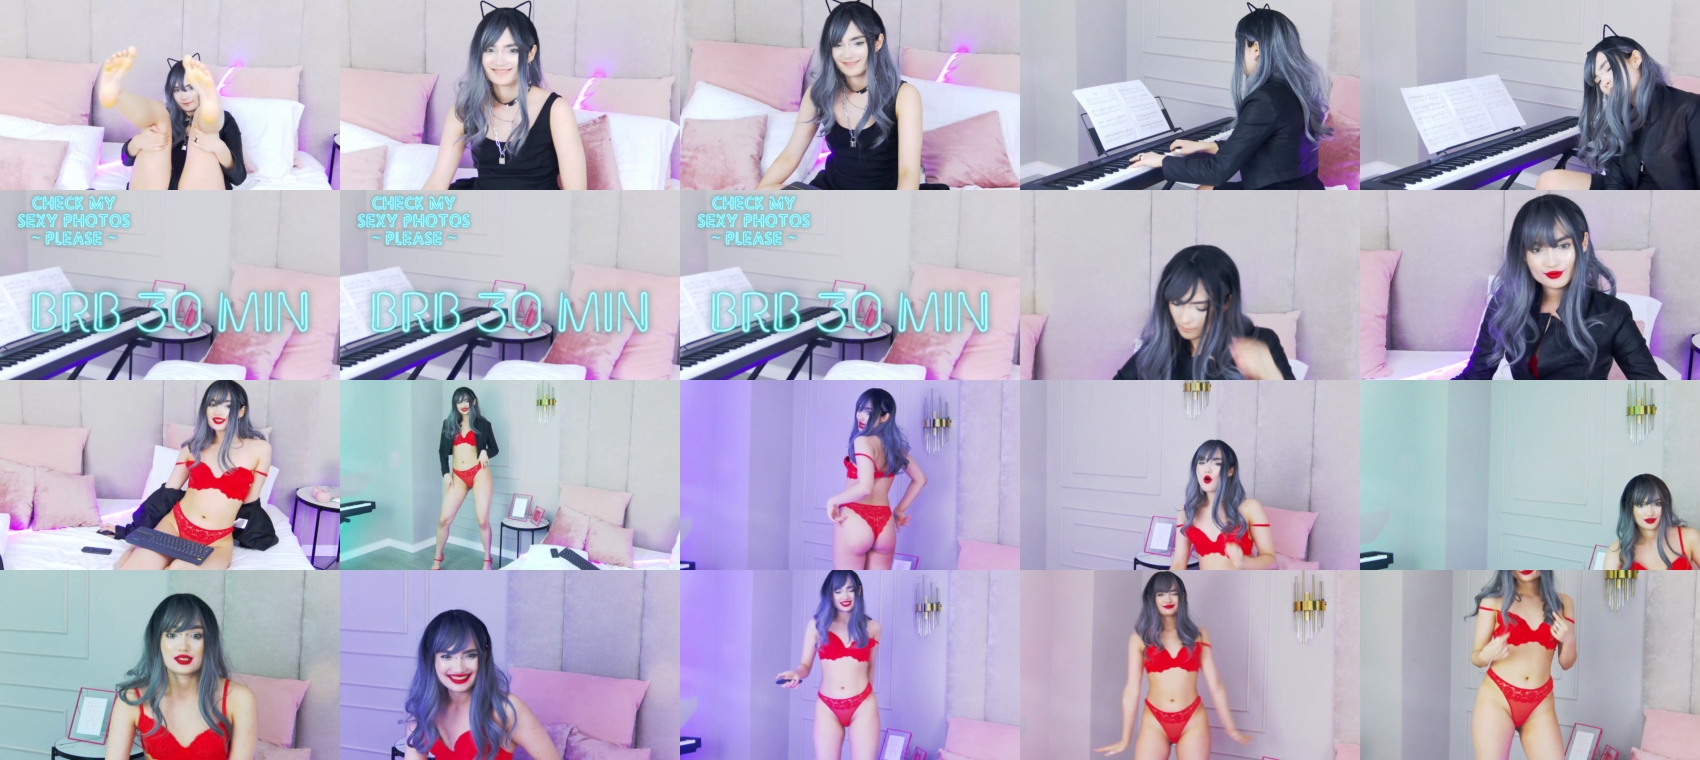 Cute_yuki webcam